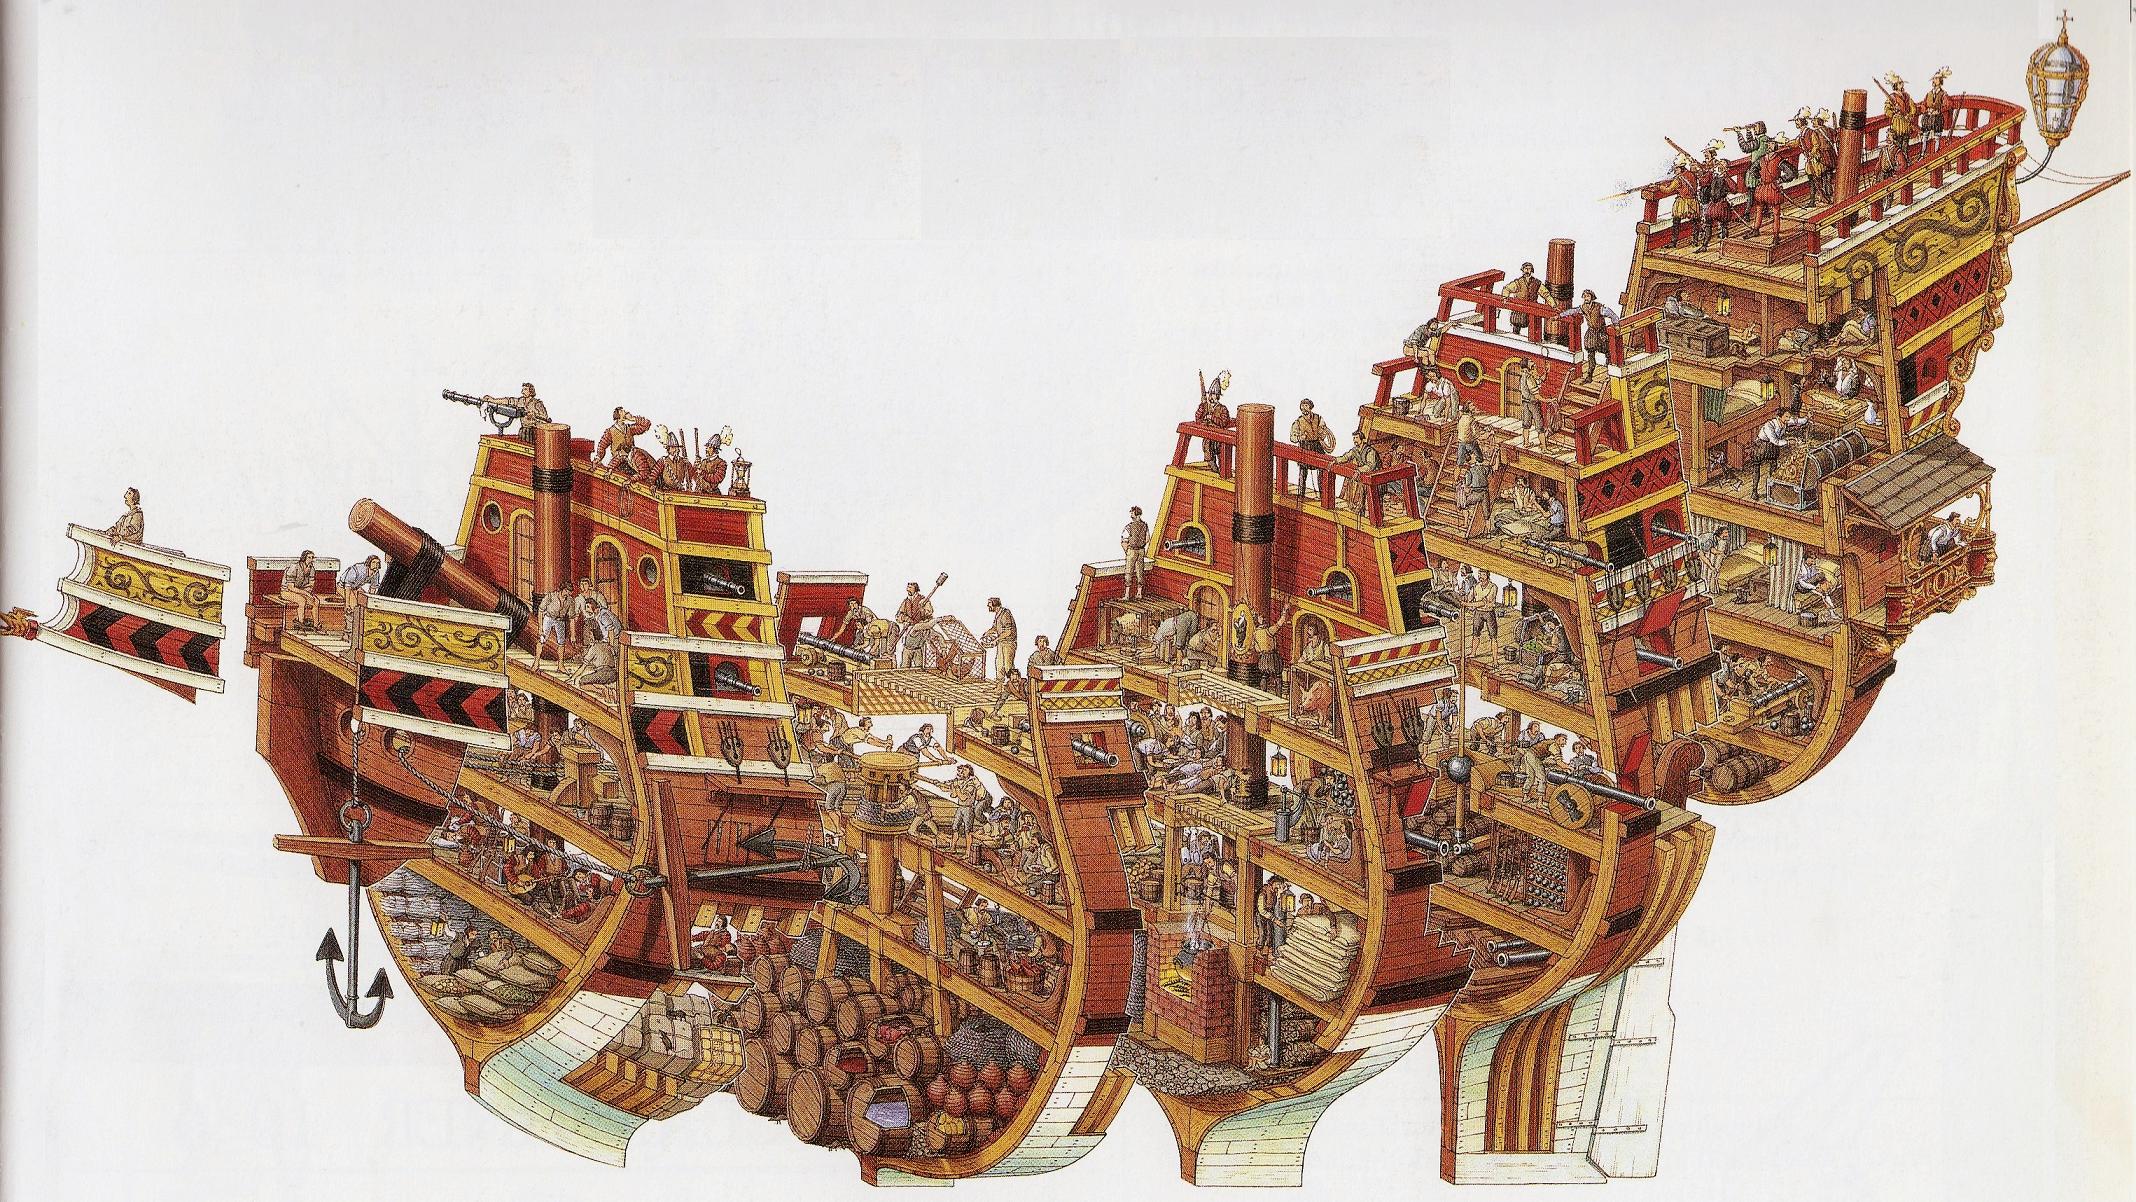 Spanish Galleon cutaway